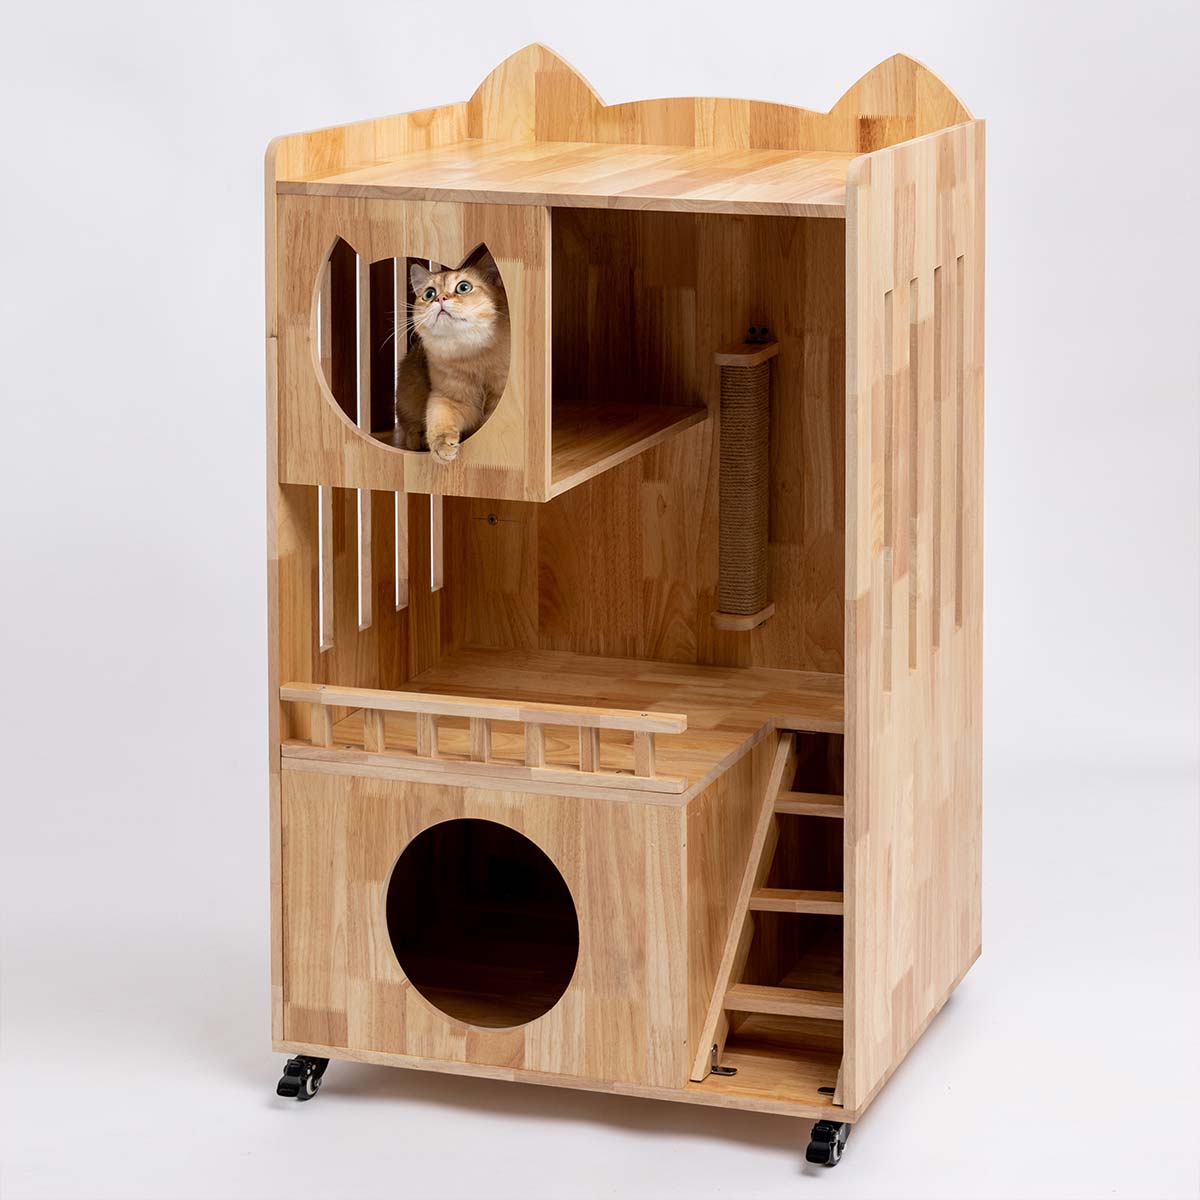 PETOMG Cat House, Cat Condo, Cat Furniture, Cat Stand| Rubberwood